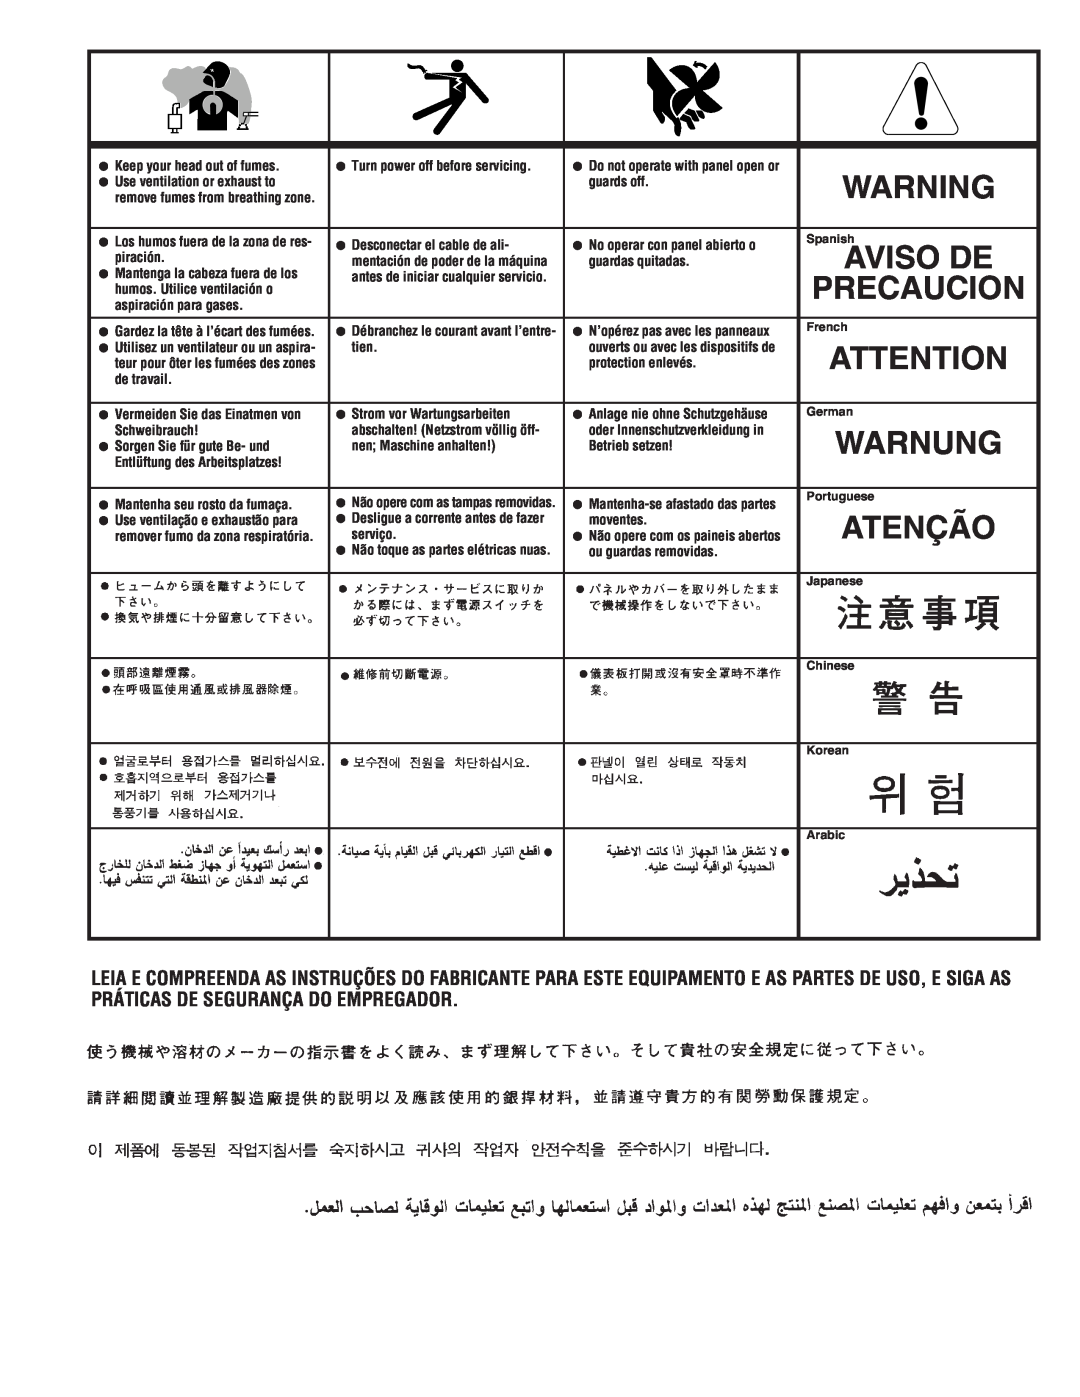 Lincoln Electric 300 D manual Warnung, Atenção, Precaucion, Aviso De, Keep your head out of fumes 